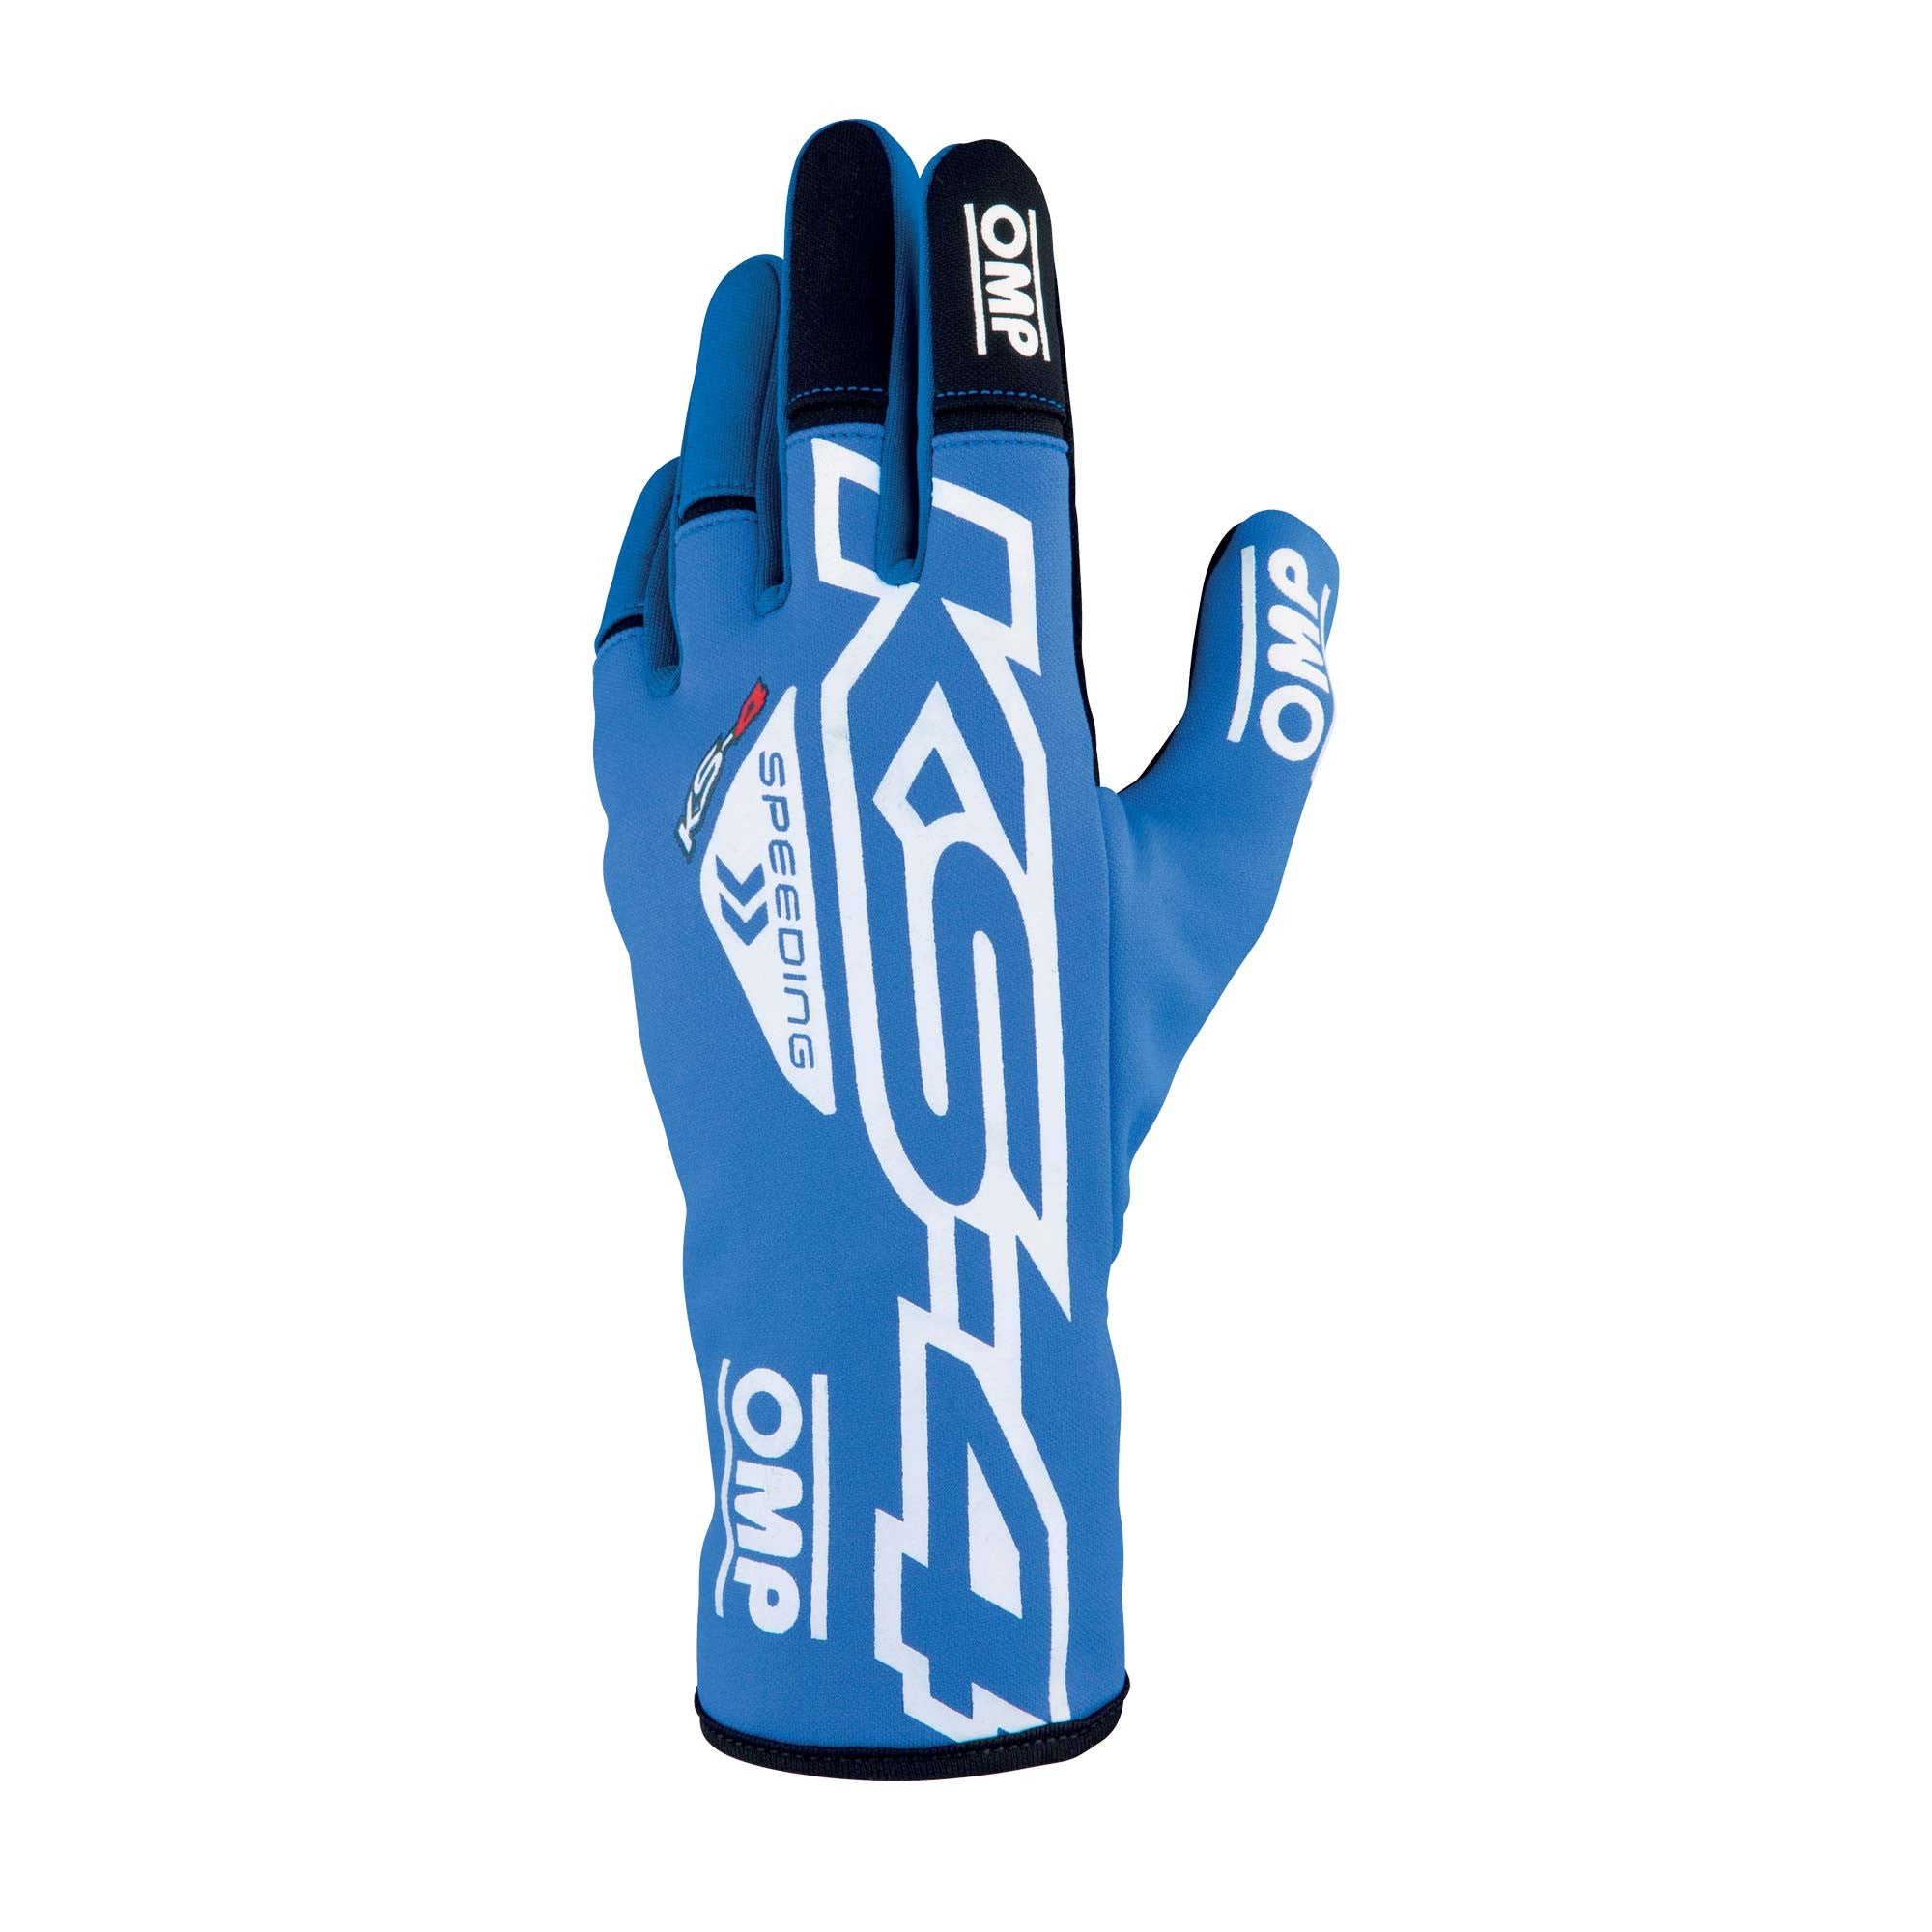 OMP KB0-2750-A01-043-XXS KS-4 Gloves my2023 Karting gloves, blue/white, size XXS Photo-0 